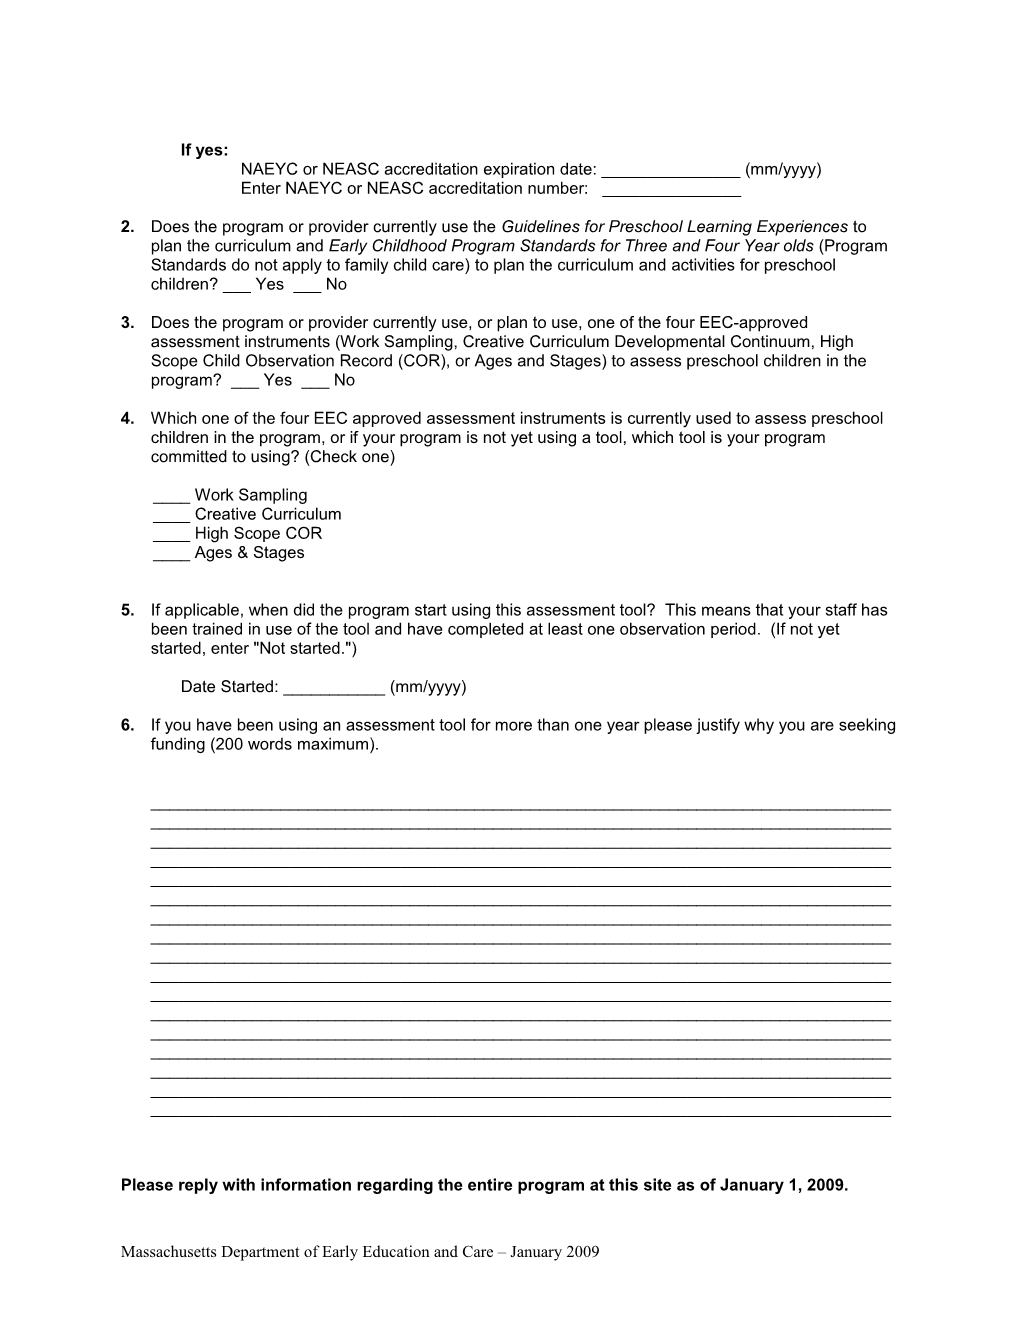 FY09 Universal Pre-Kindergarten (UPK) Assessment Planning Grant Questionnaire for Private